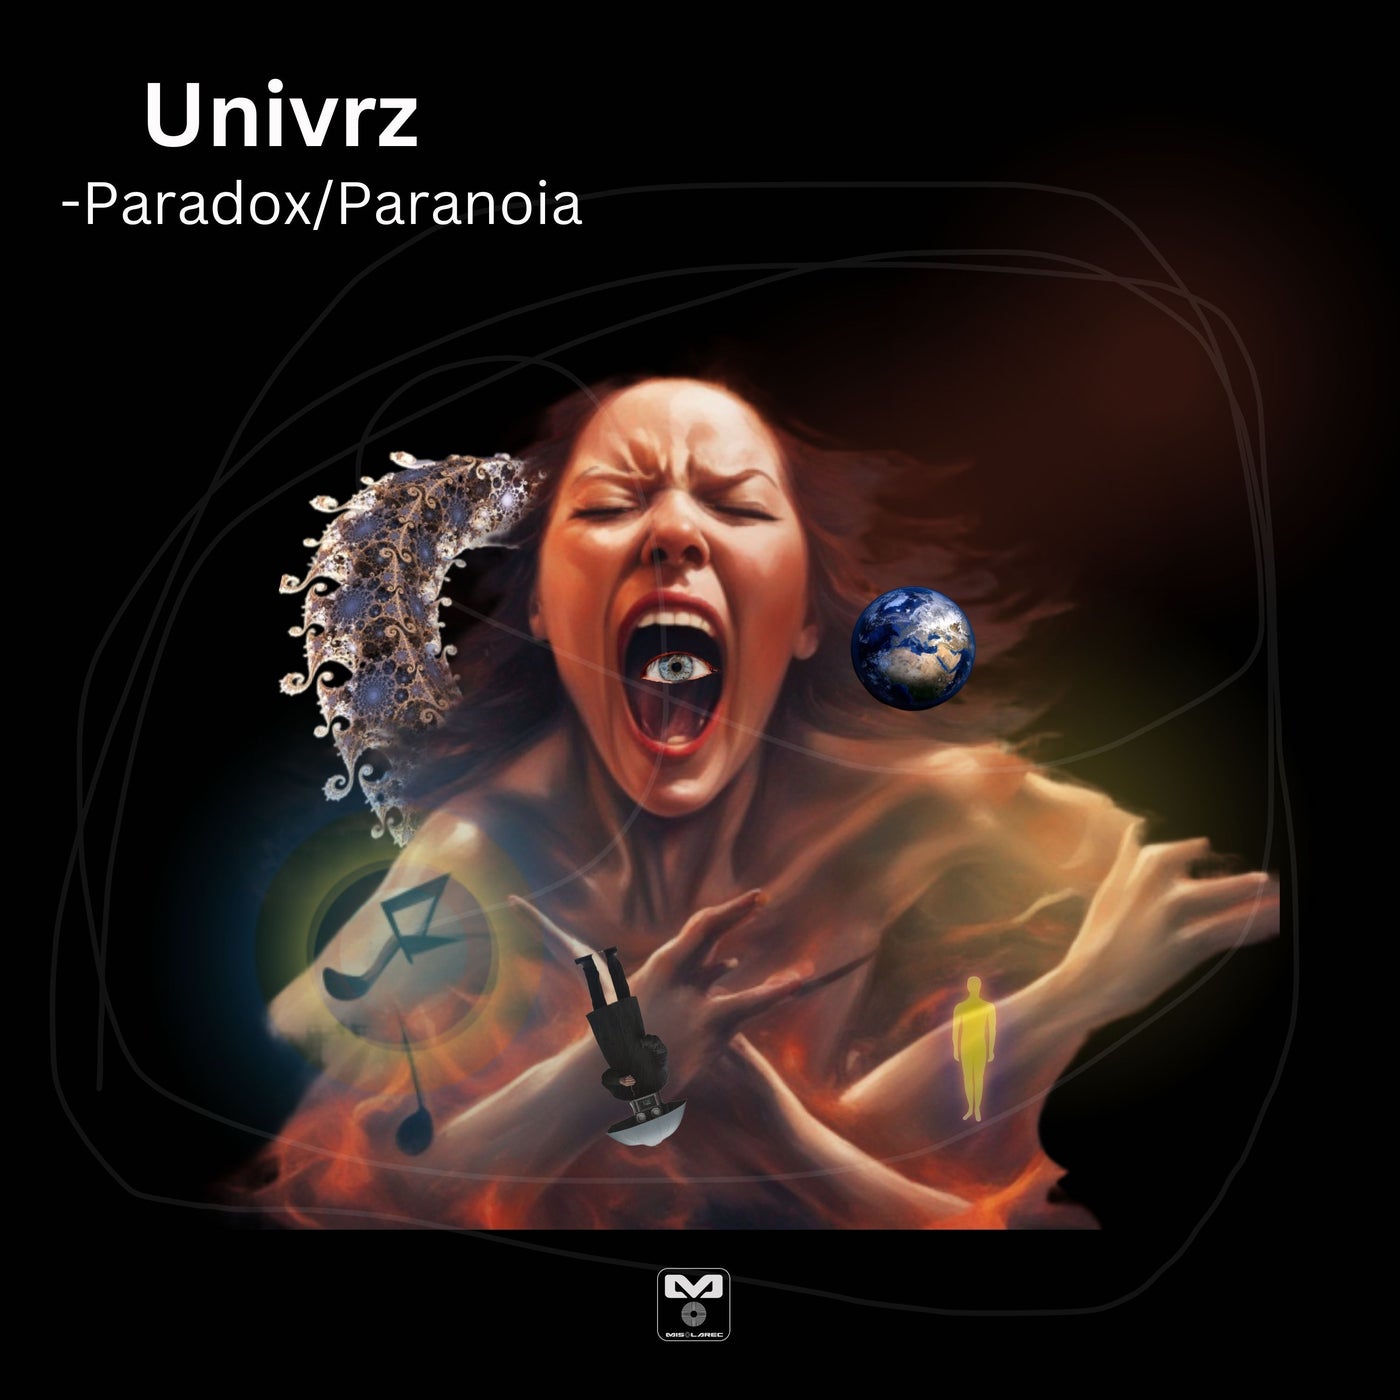 Paradox/Paranoia